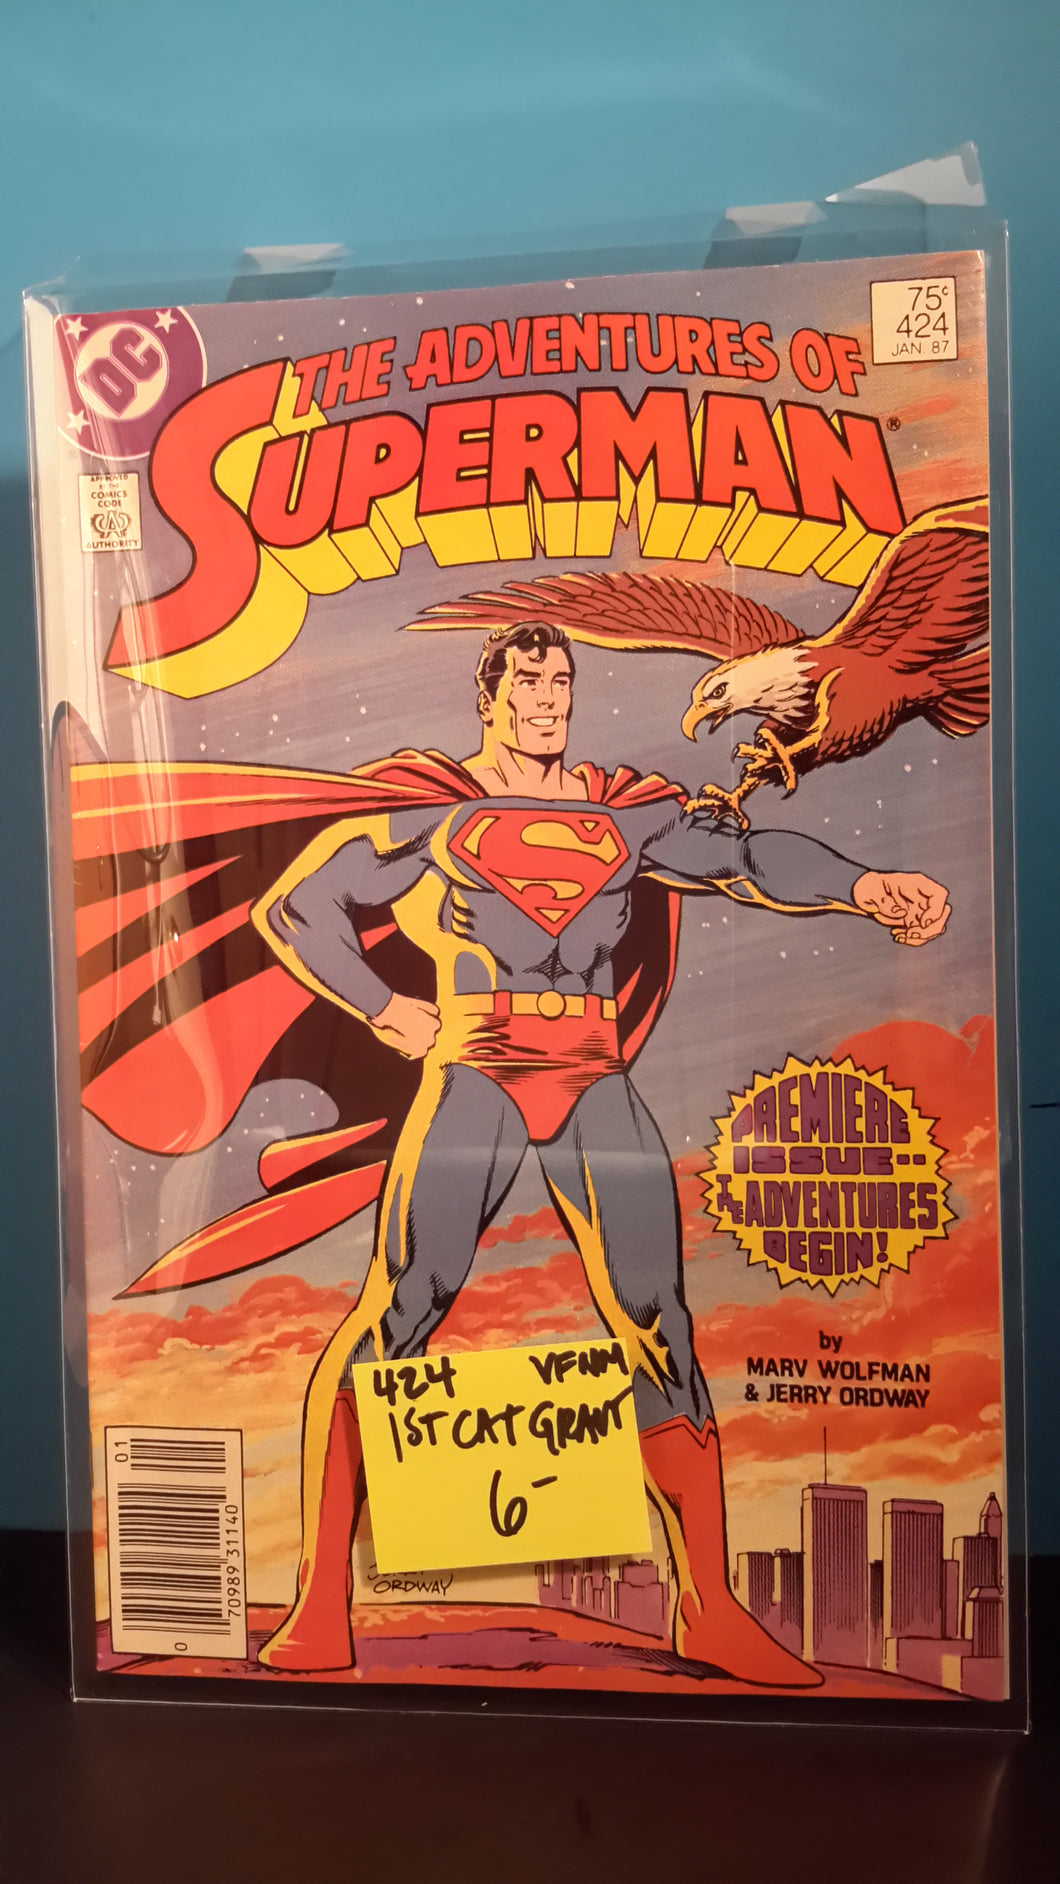 ADVENTURES OF SUPERMAN #424